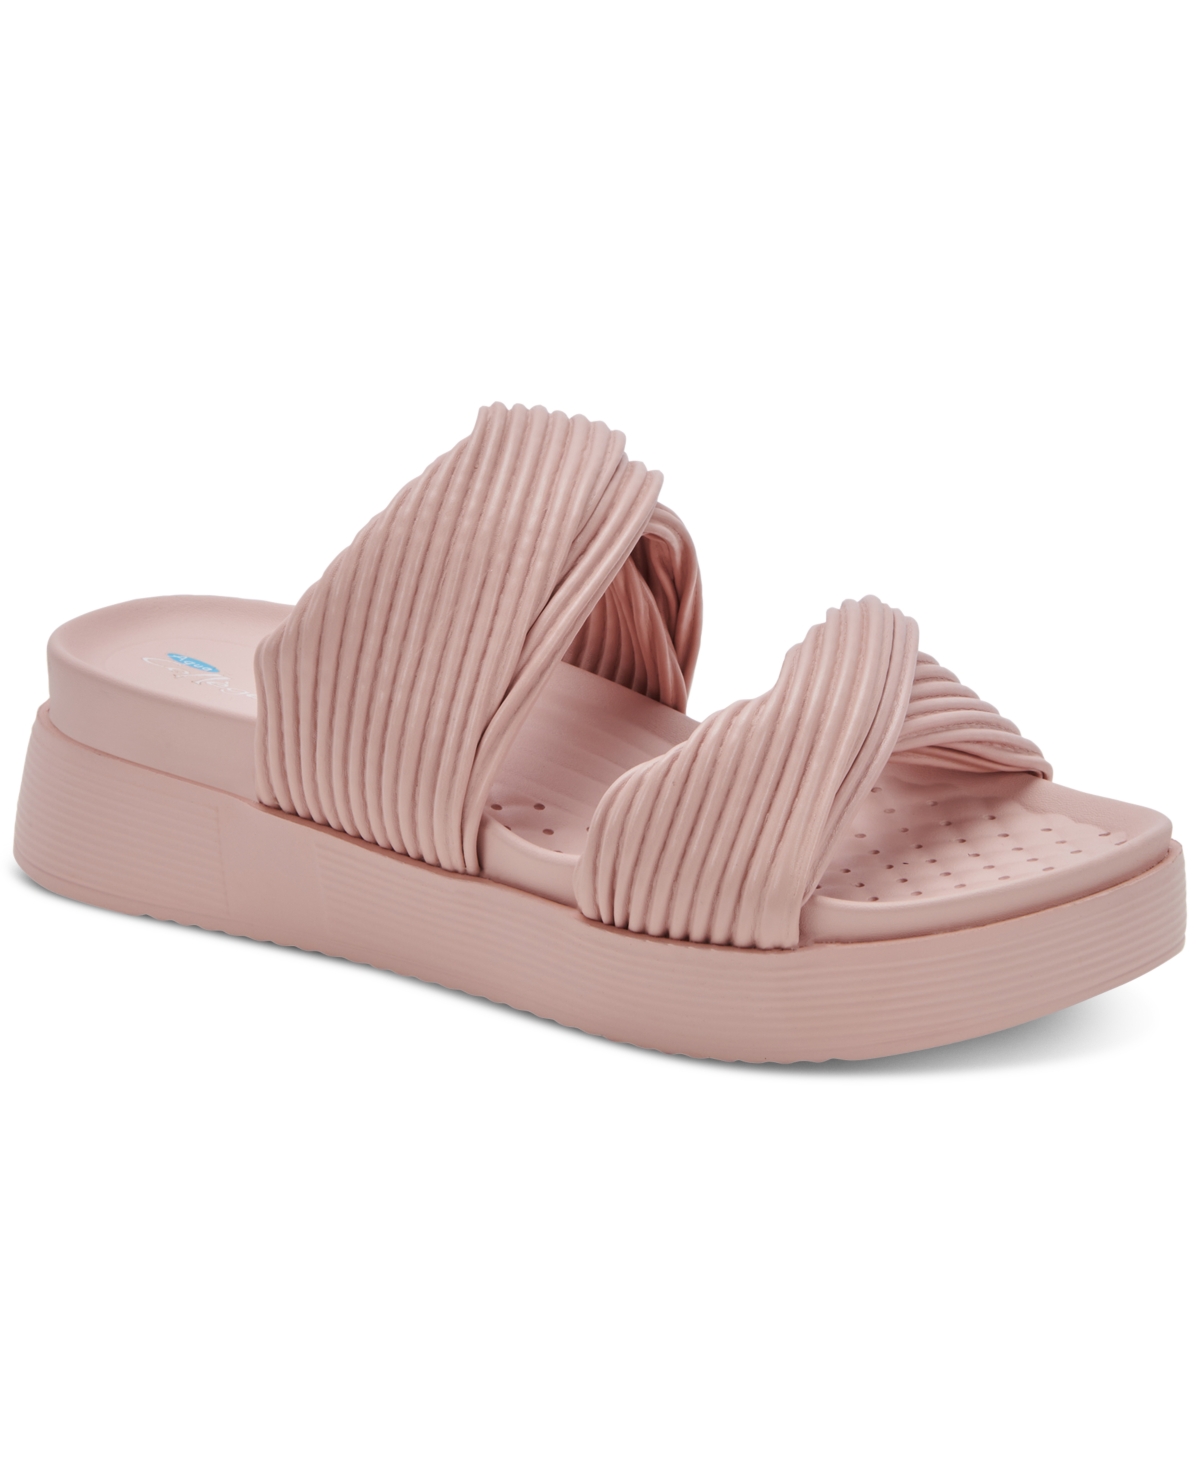 Aqua College Women's Clarissa Waterproof Slide Sandals, Created for Macy's Women's Shoes